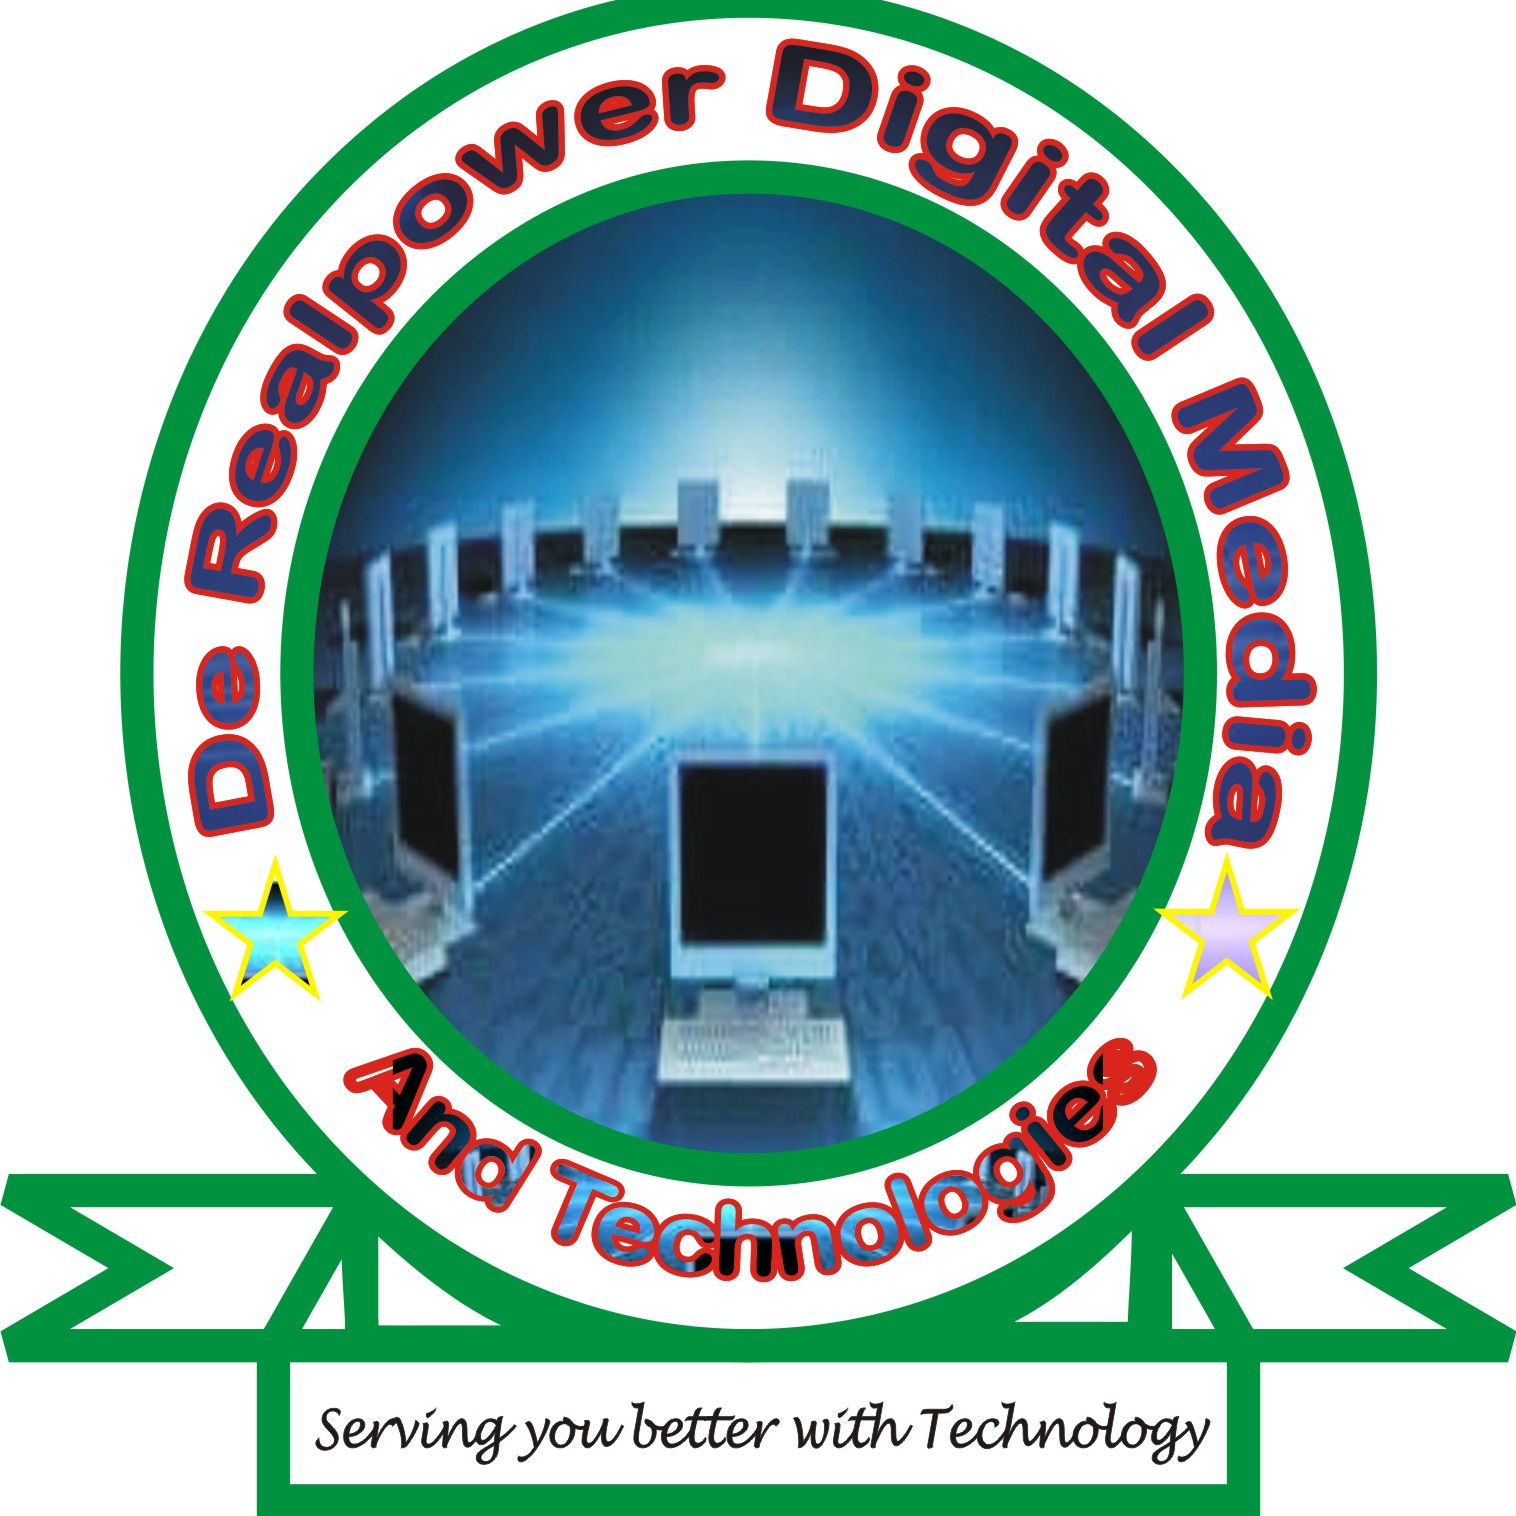 De Realpower Digital Media And Technologies